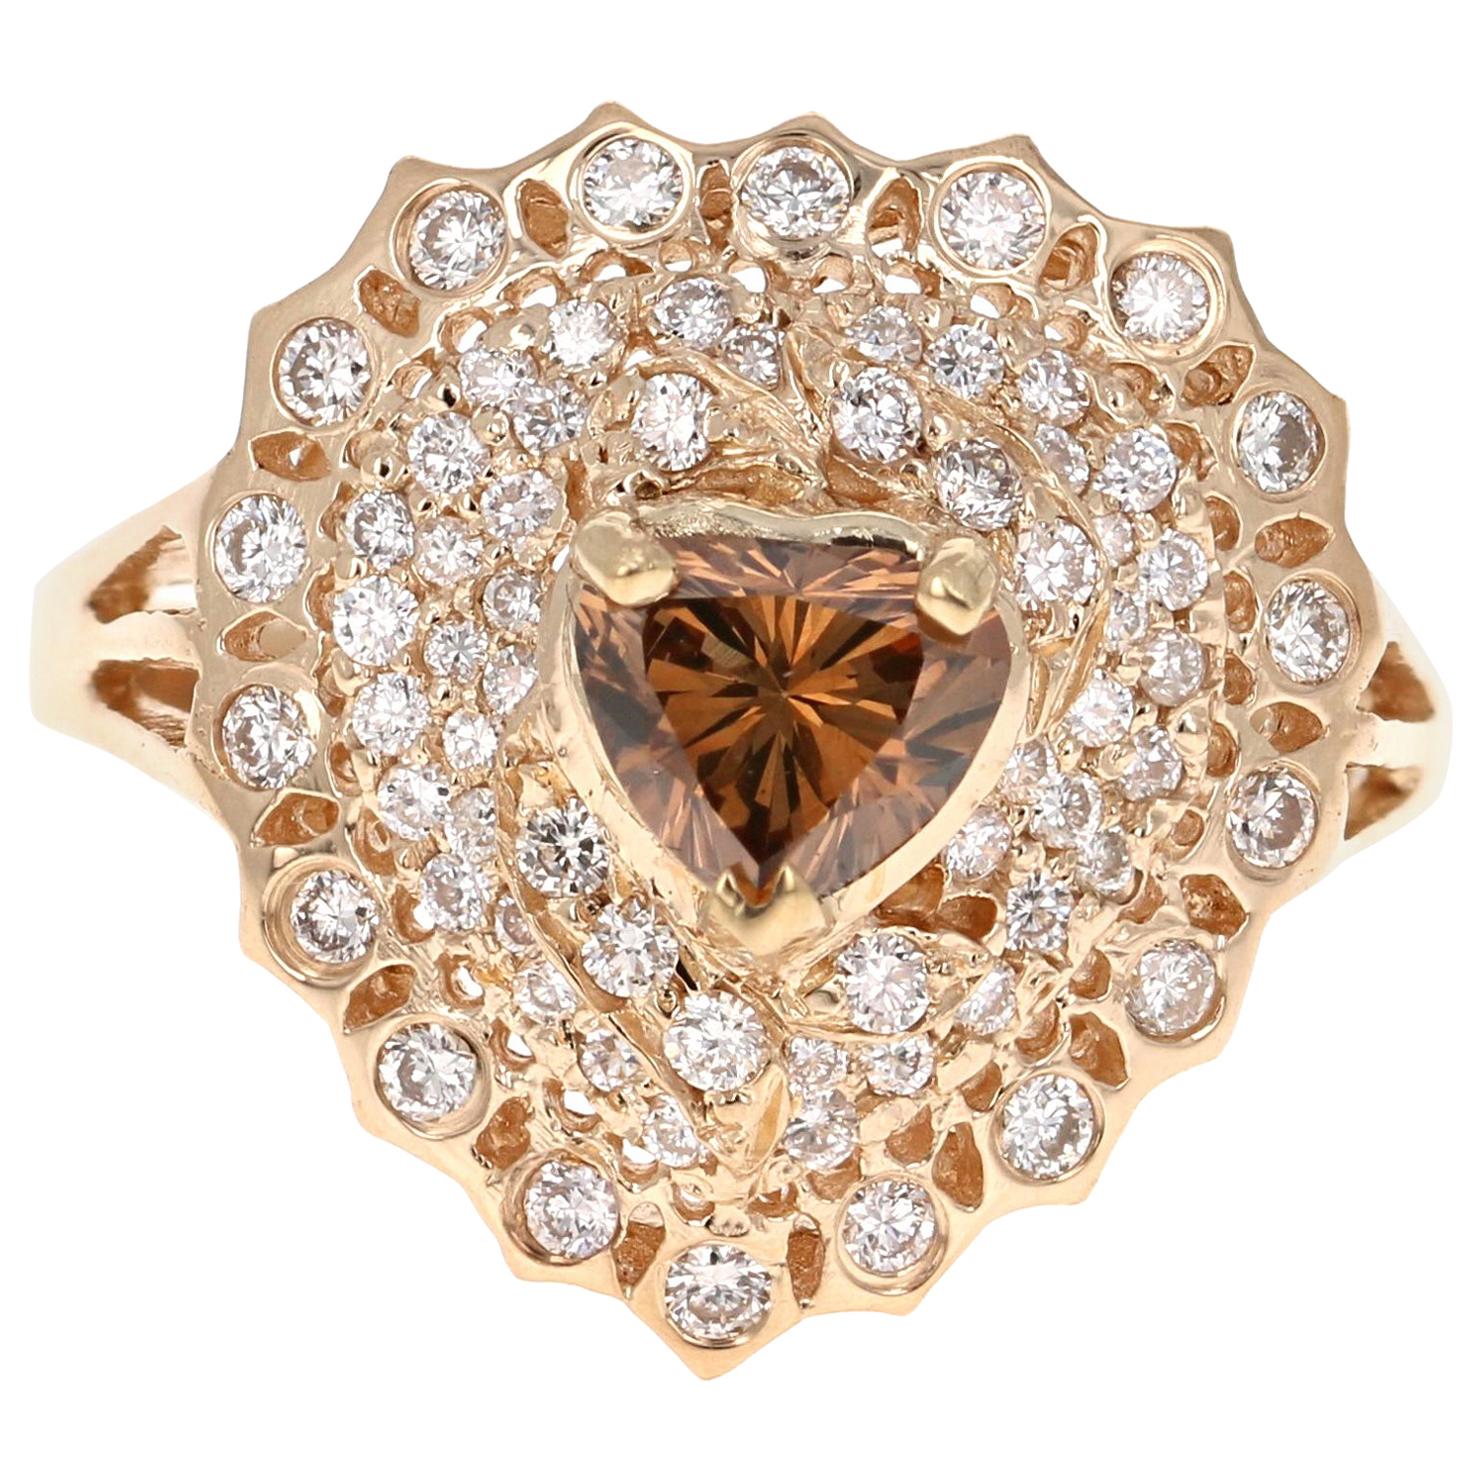 1.17 Carat Heart Cut Champagne Diamond Cluster Ring 14 Karat Yellow Gold